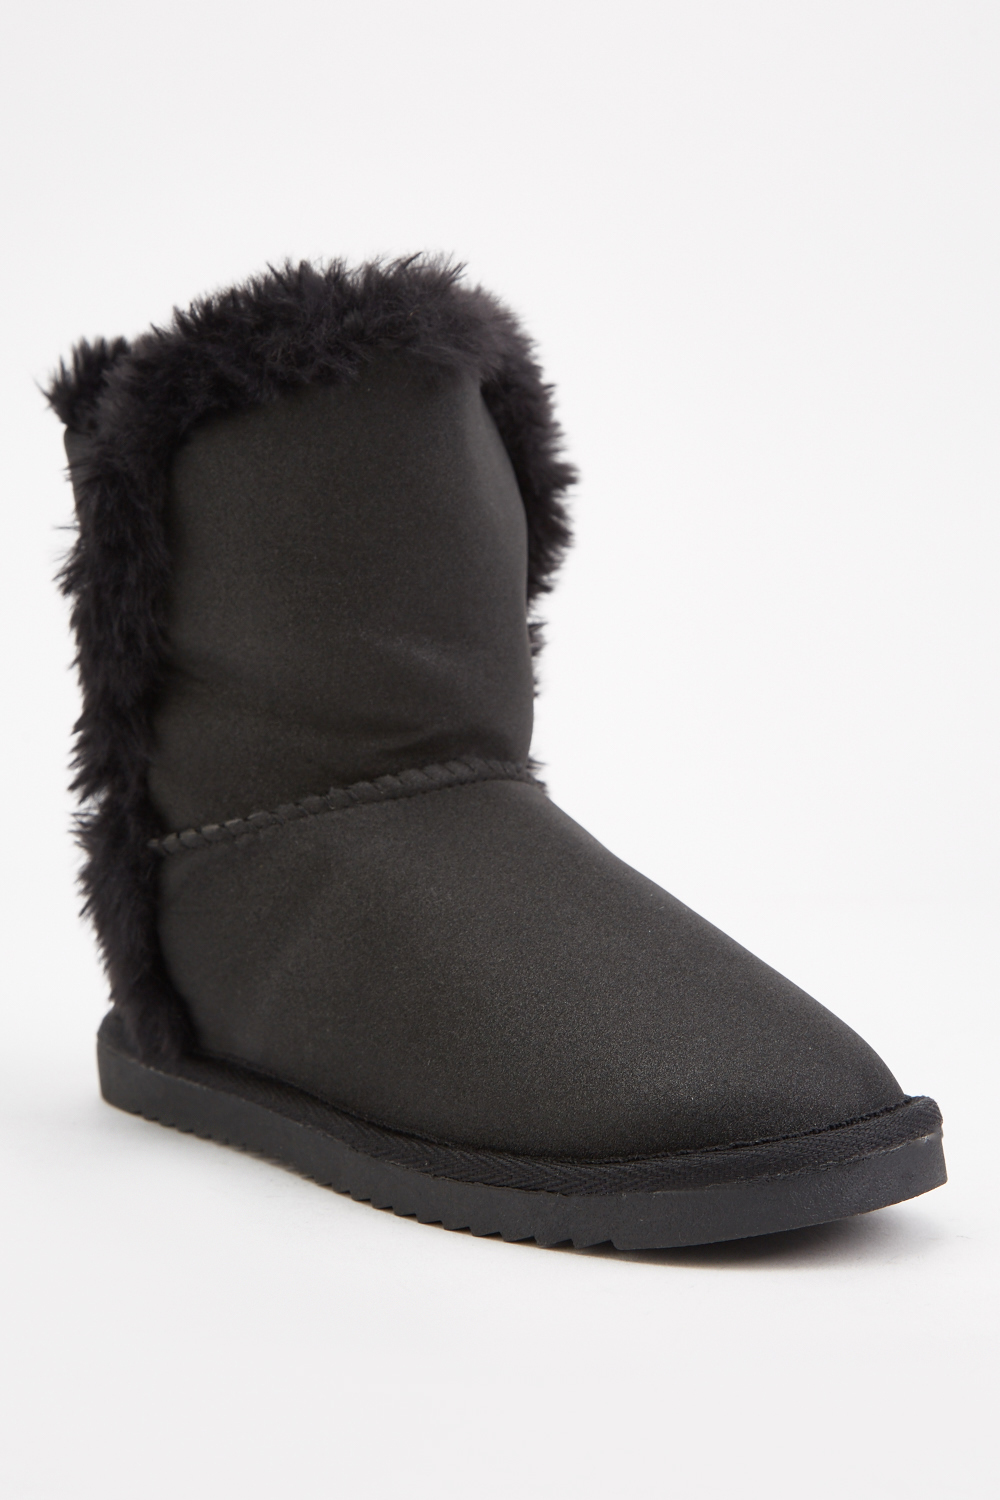 Kids Faux Fur Trim Boots - Just $7